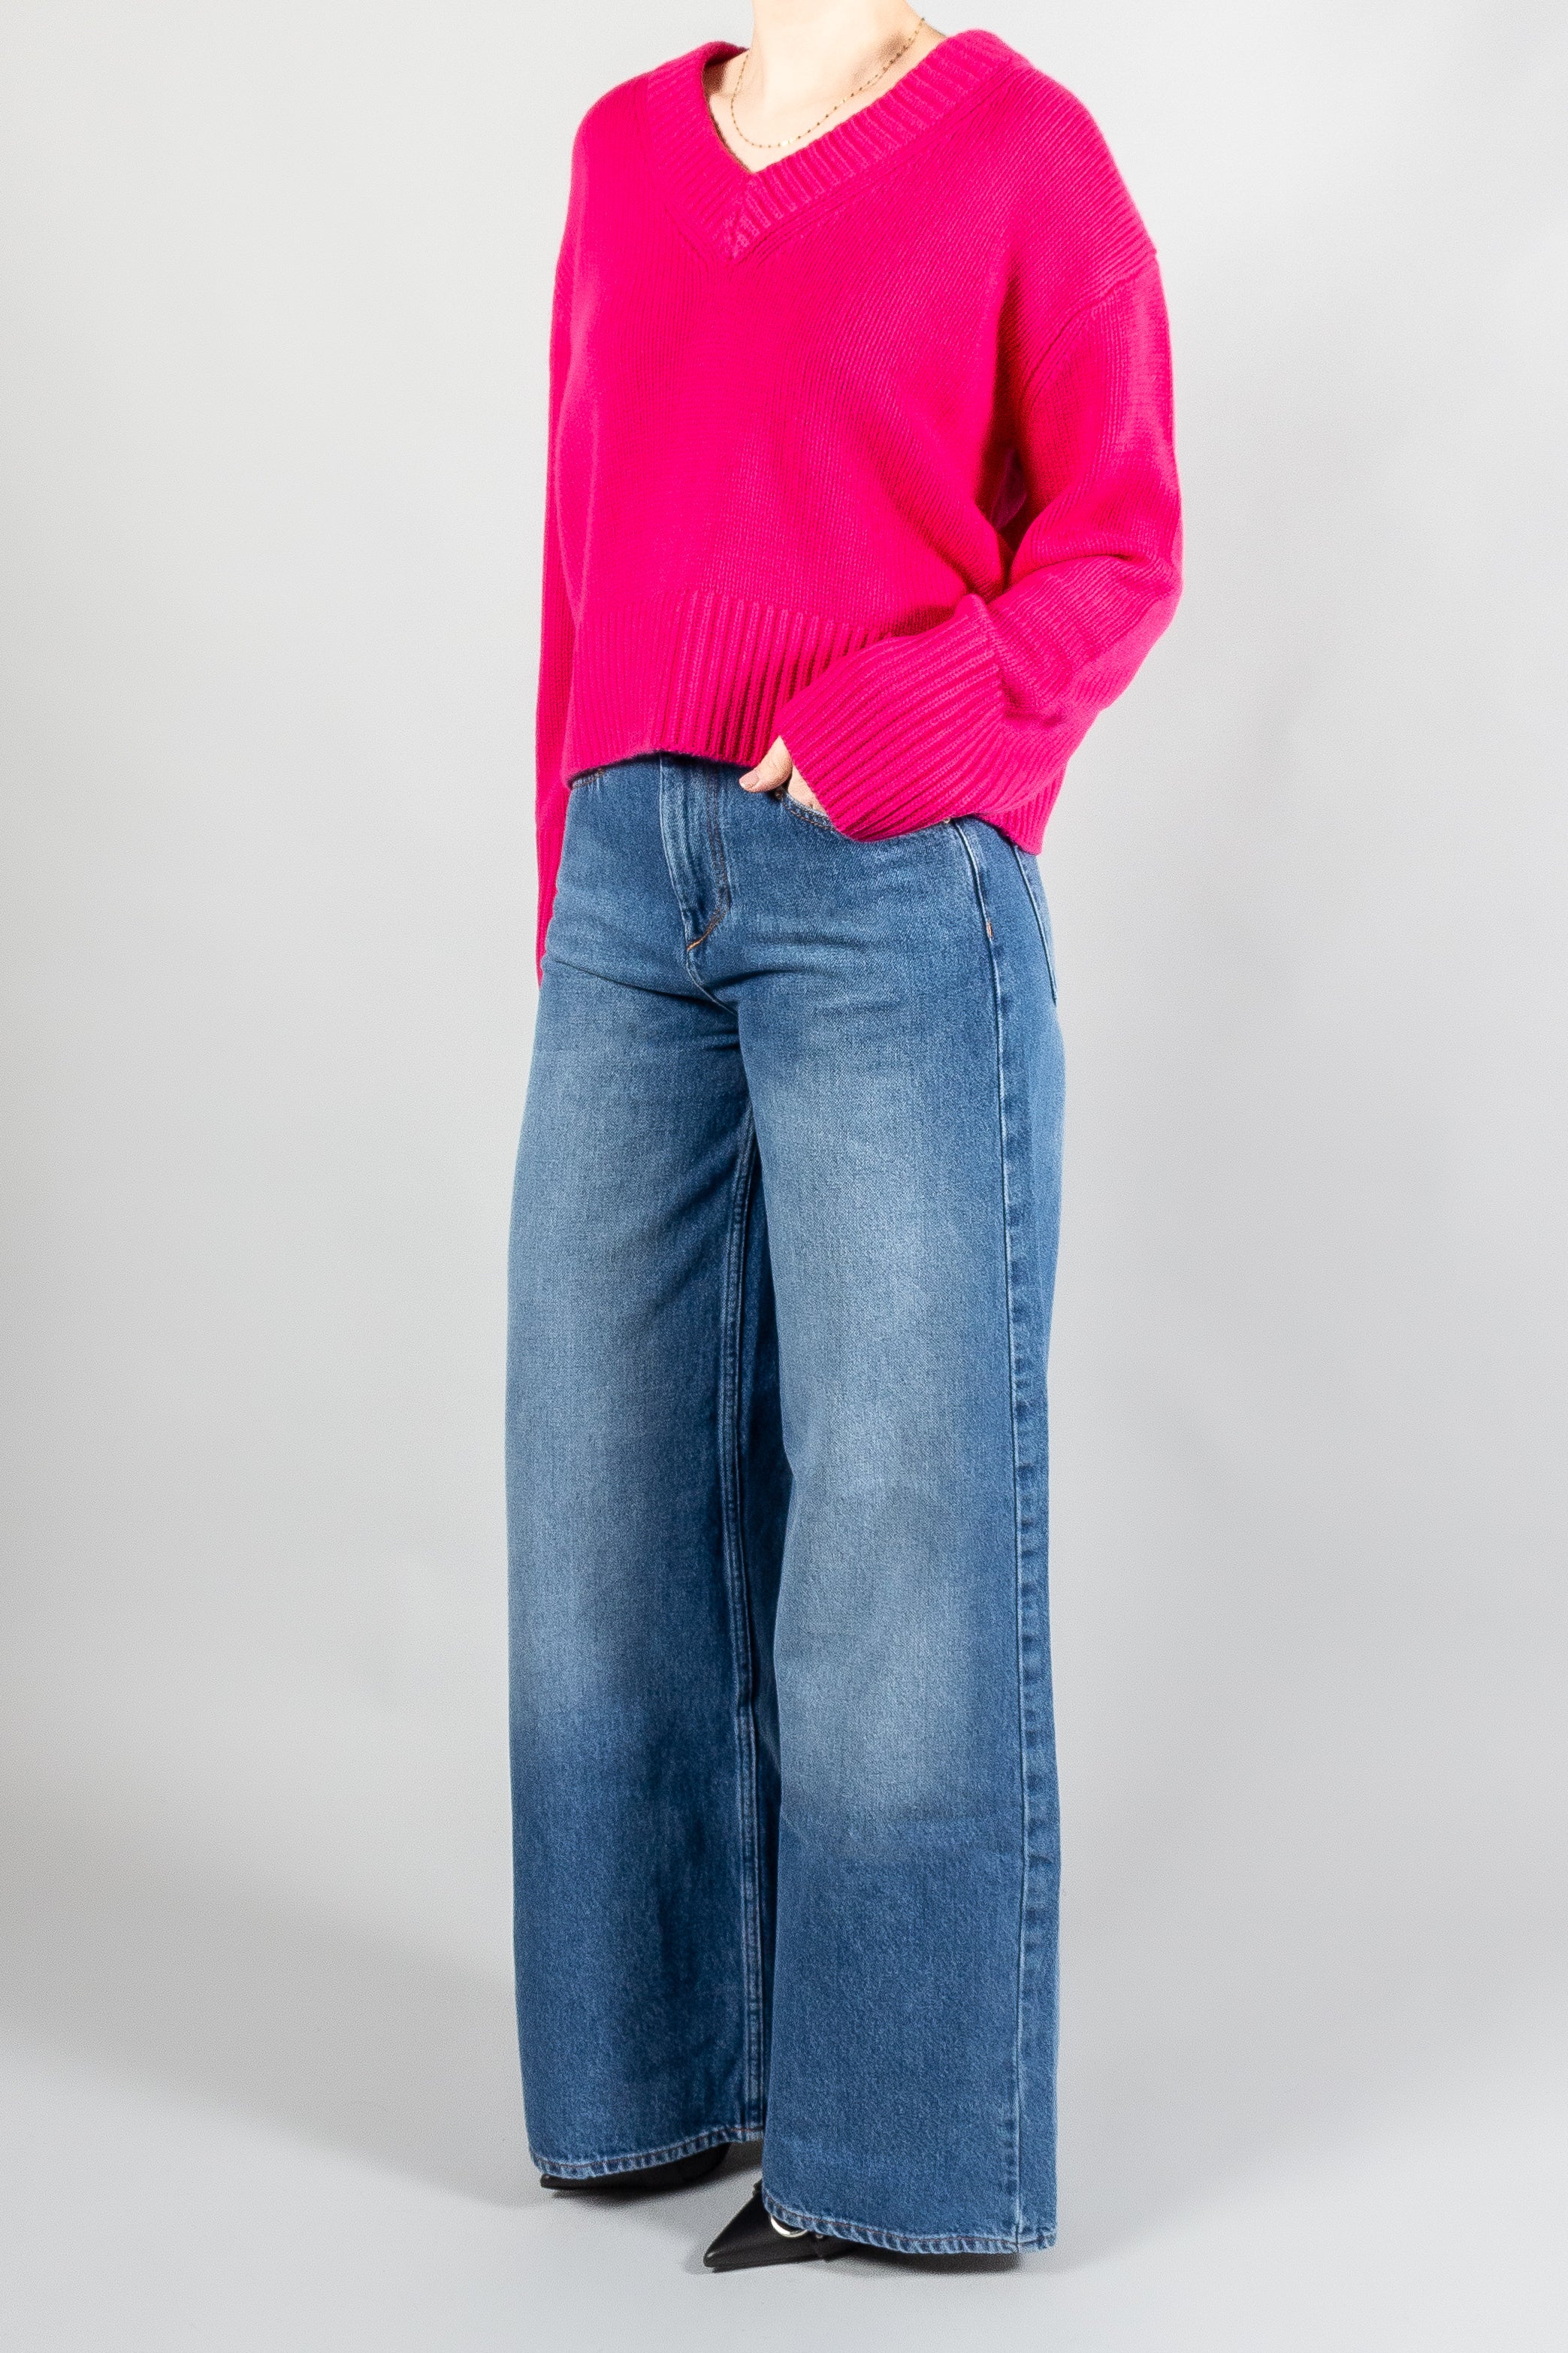 Lisa Yang Aletta Sweater-Knitwear-Misch-Boutique-Vancouver-Canada-misch.ca